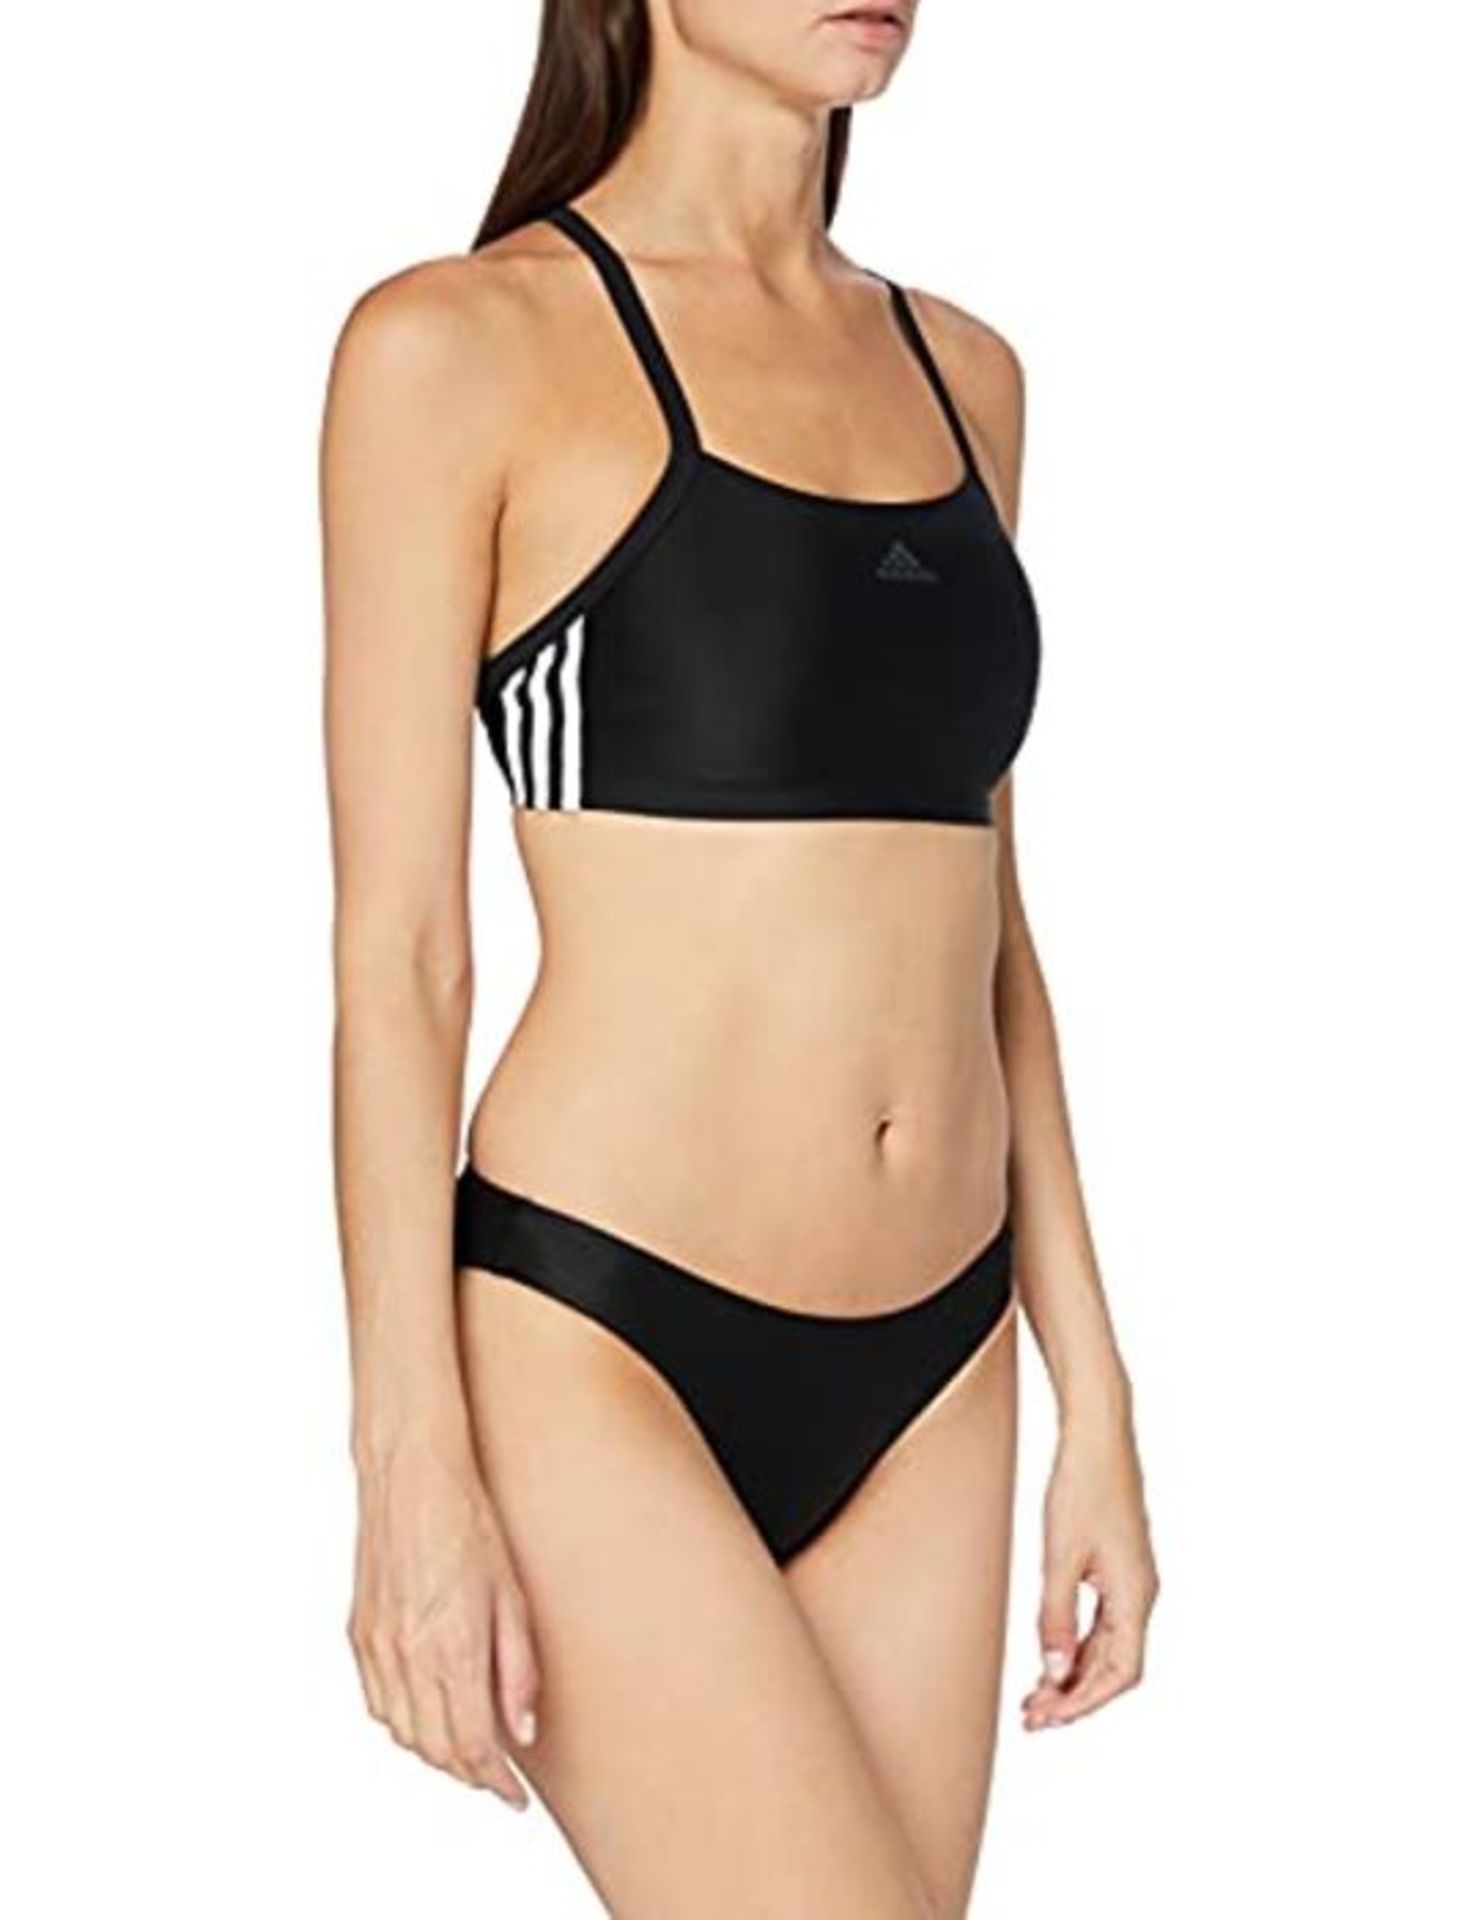 Adidas Women's Fit 2pc 3s Swimsuit, Black, 36 (Manufacturer Size: 40)